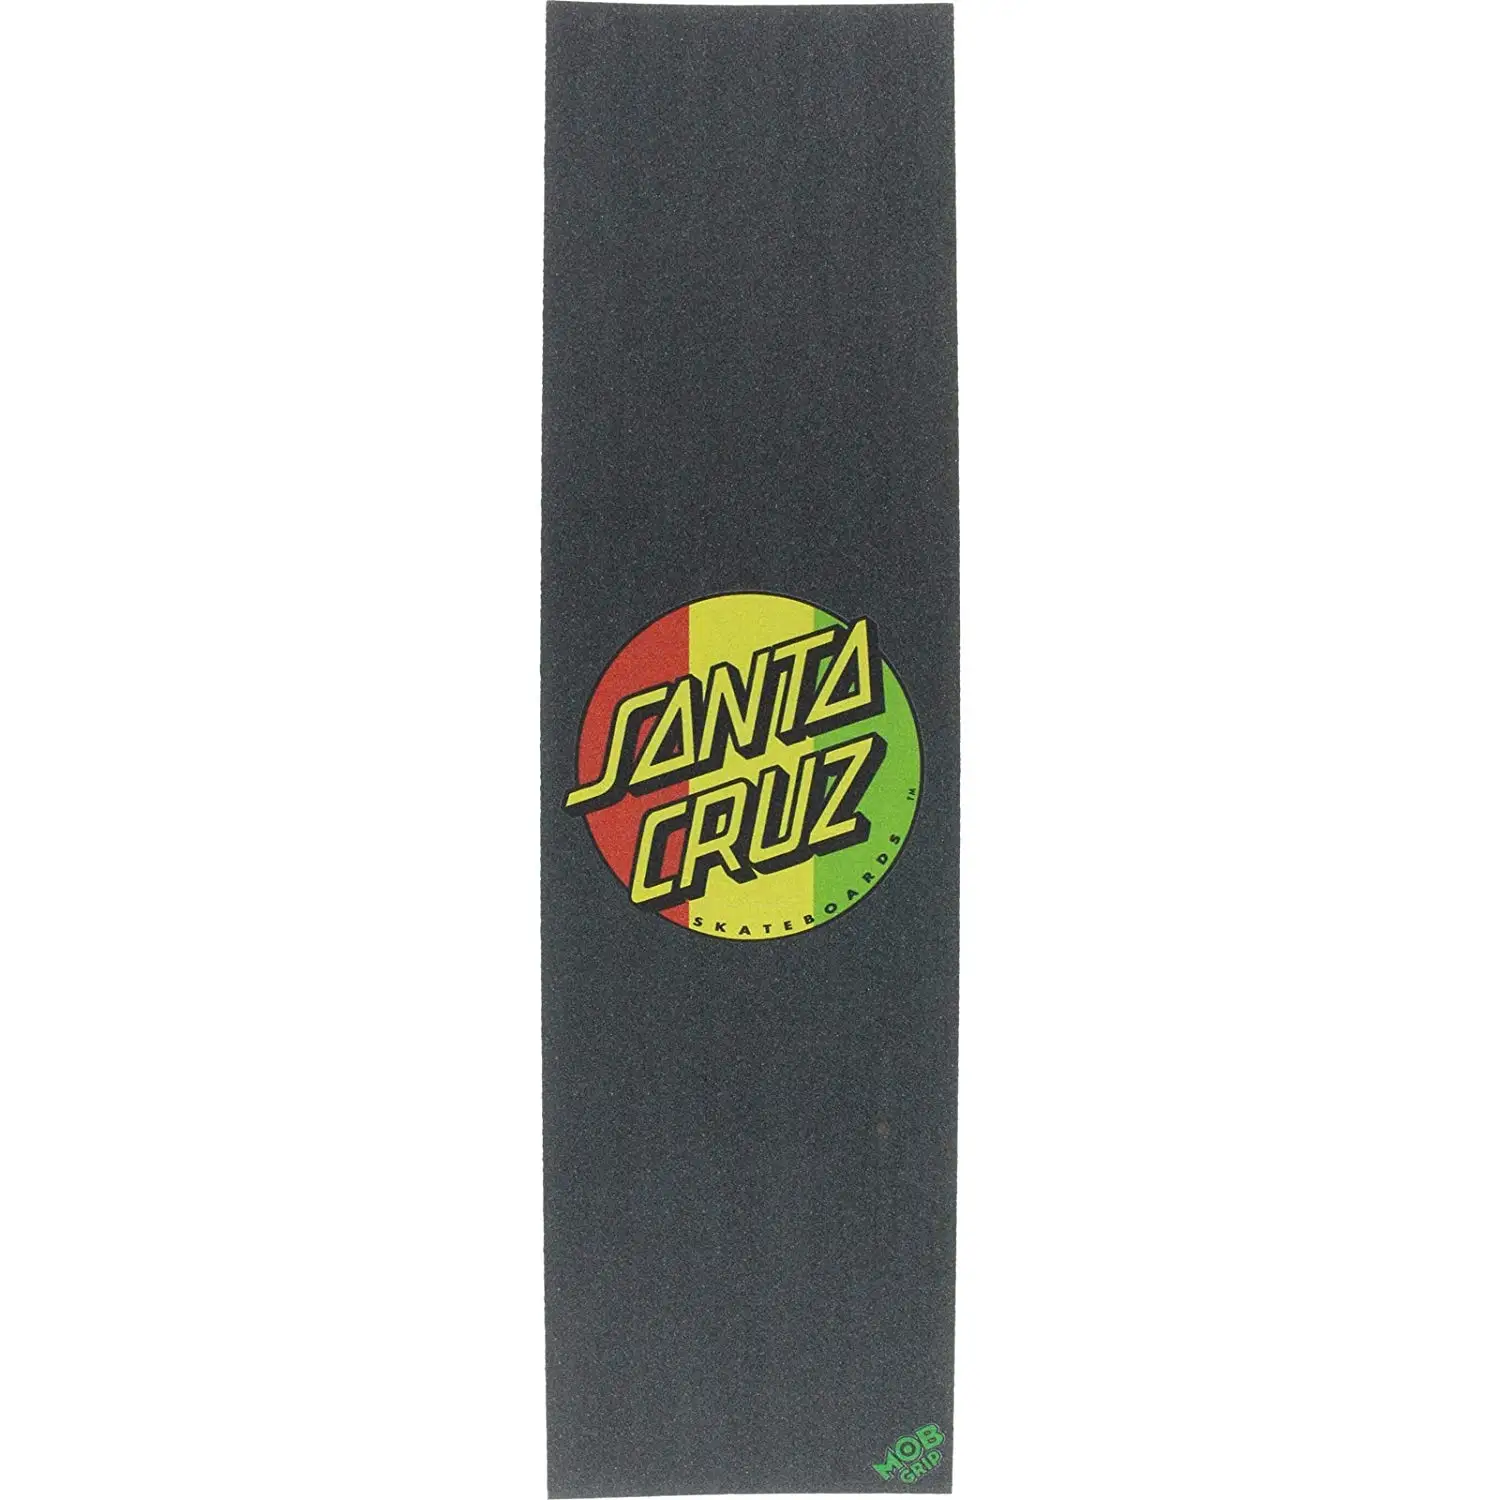 santa cruz skateboard grip tape